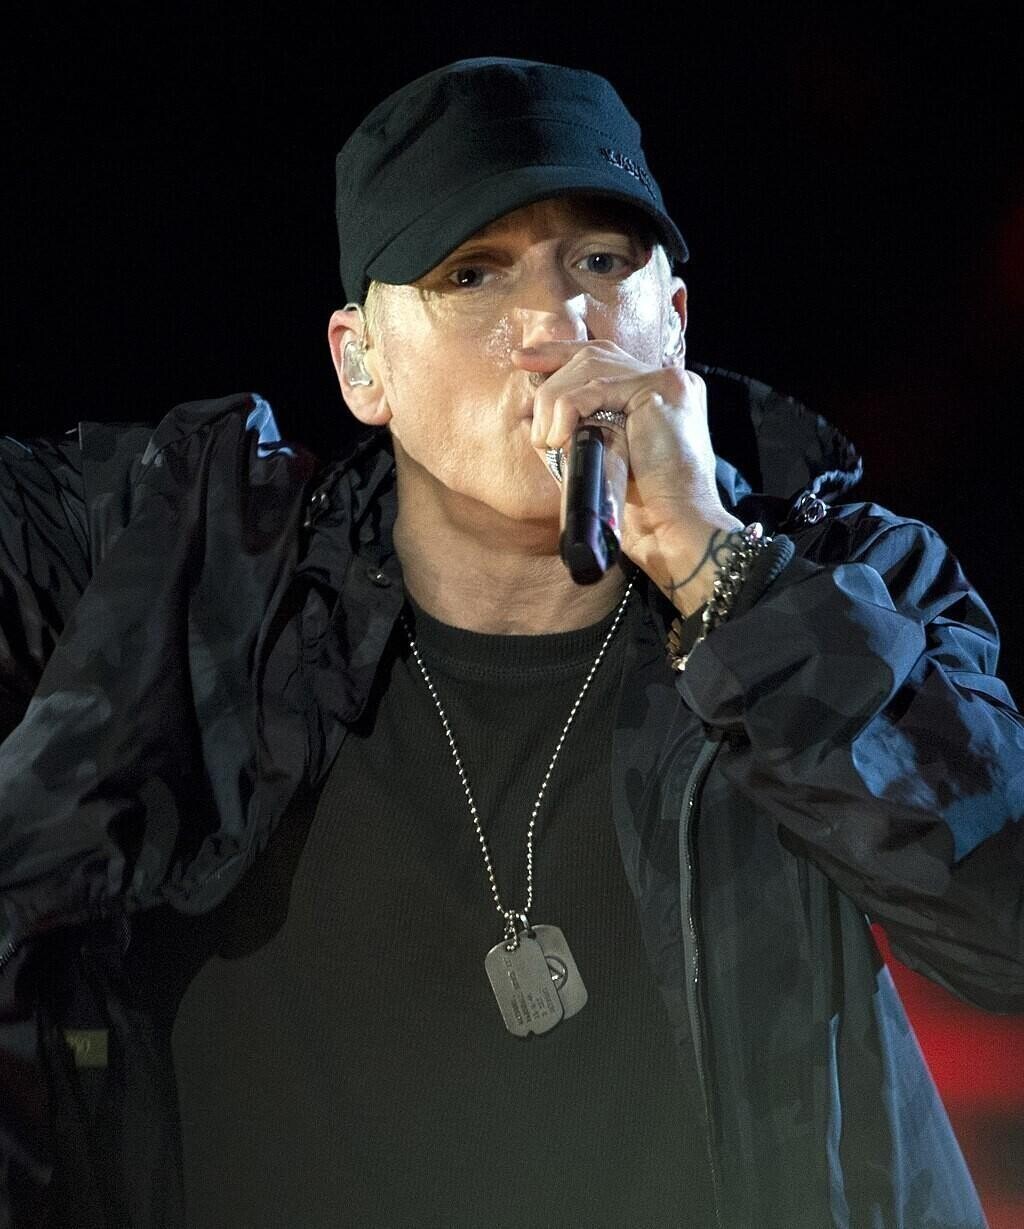 Eminem dressed all in black